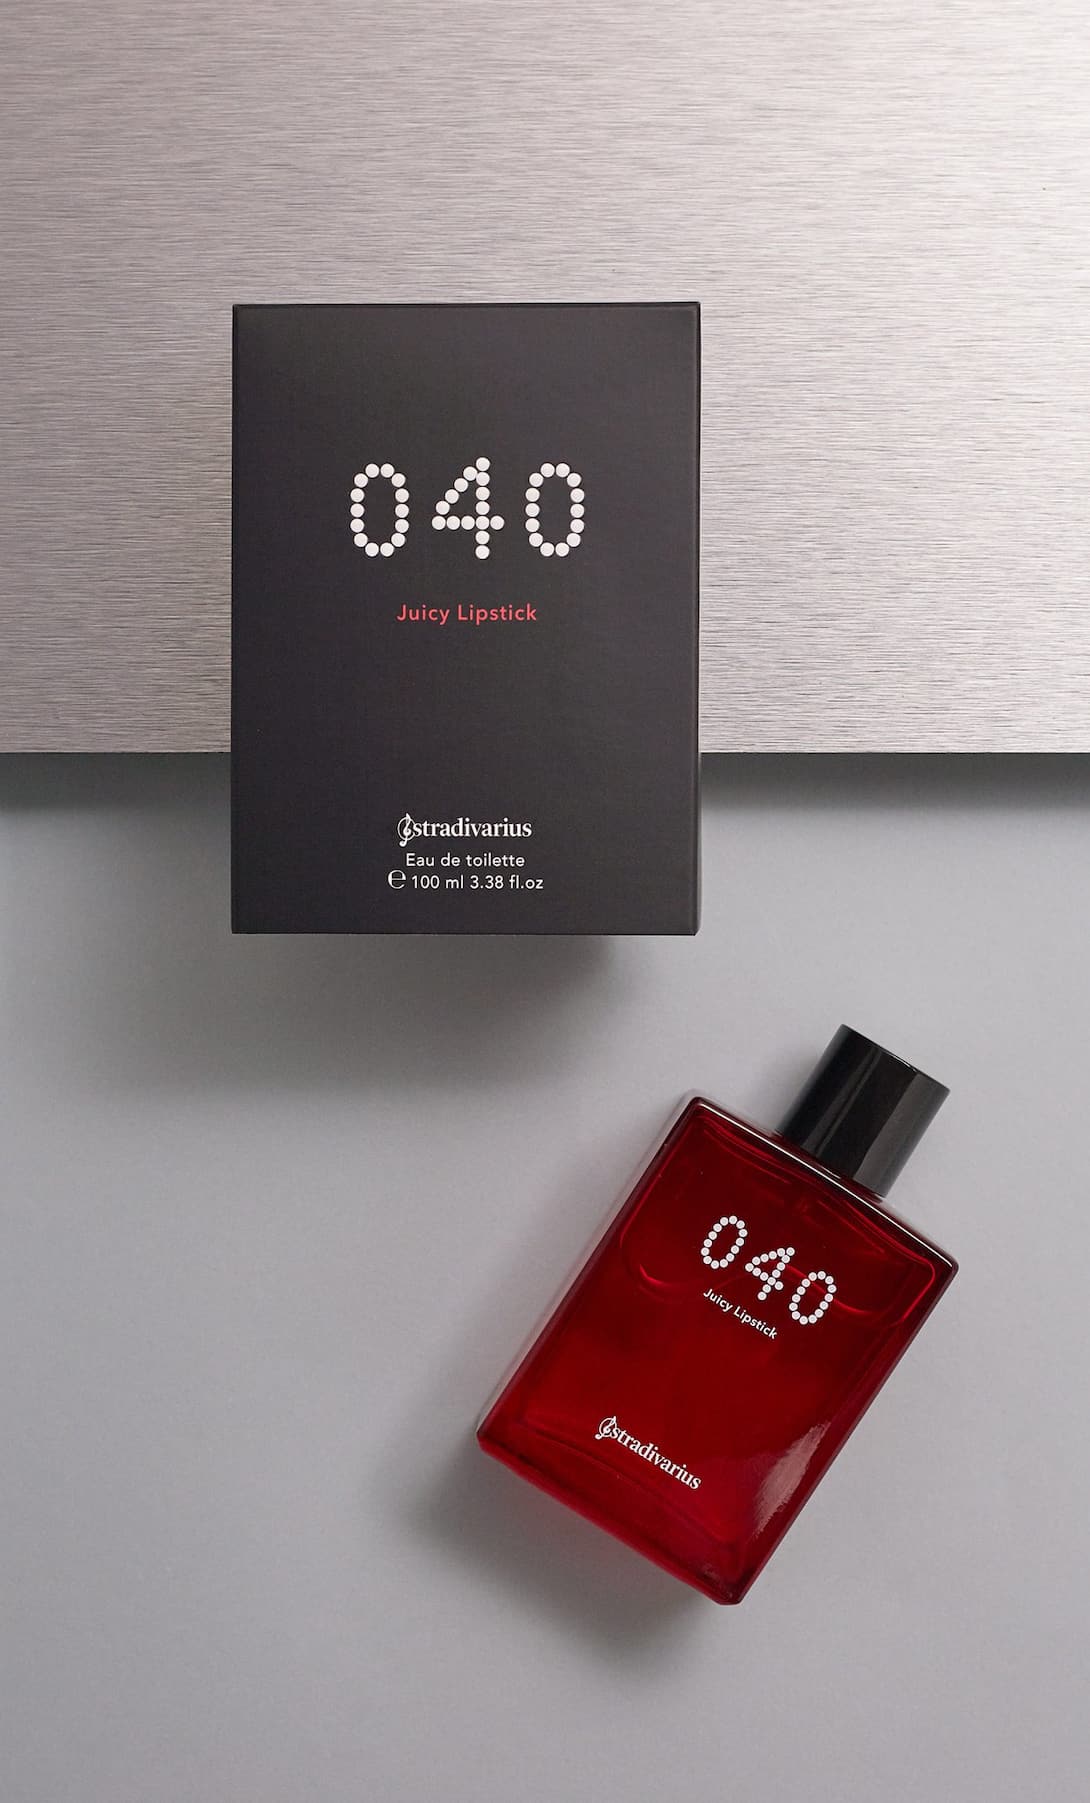 040 Juicy Lipstick Stradivarius perfume 